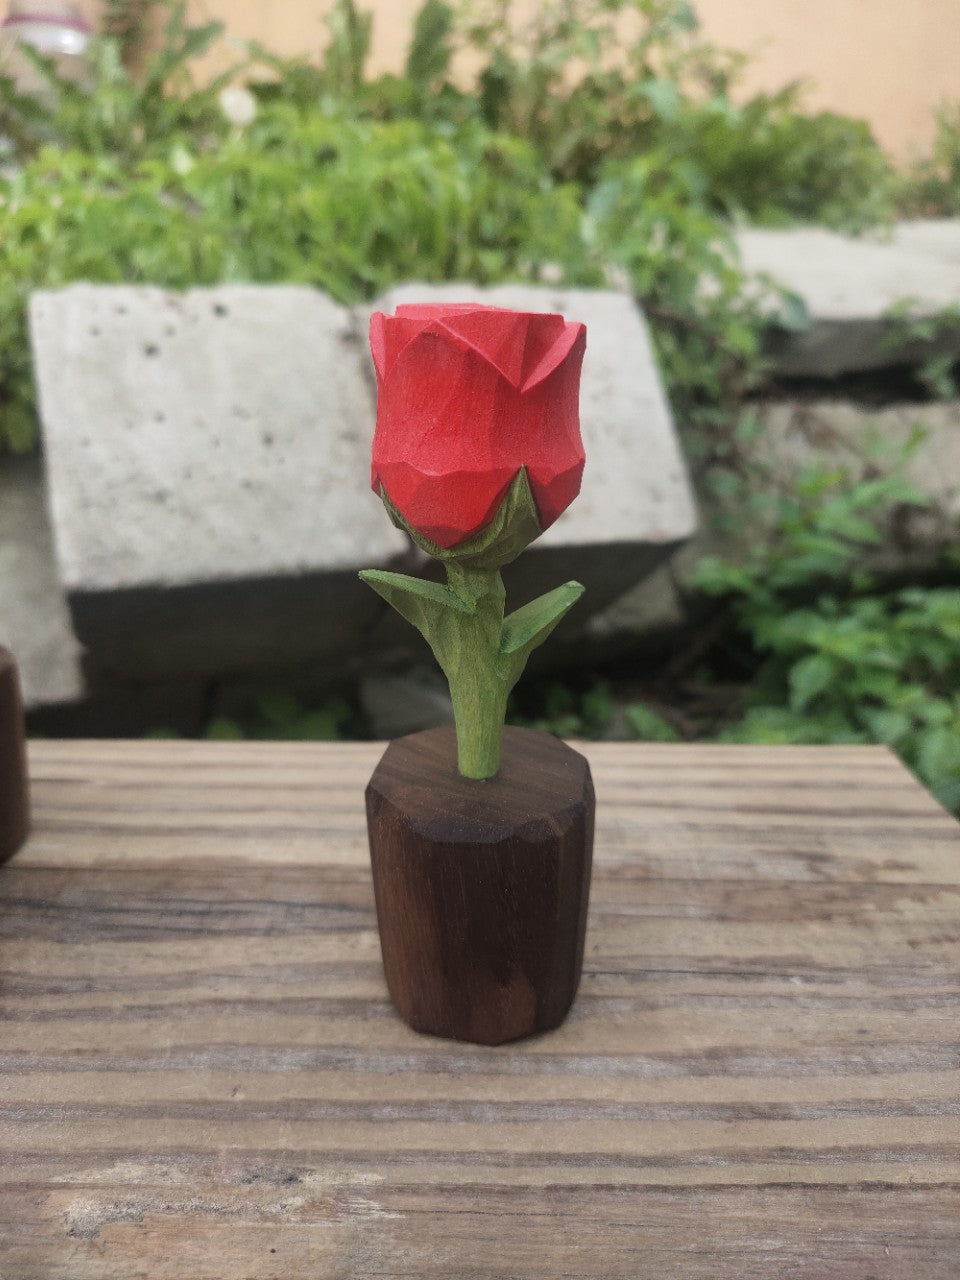 Handmade wooden flowers